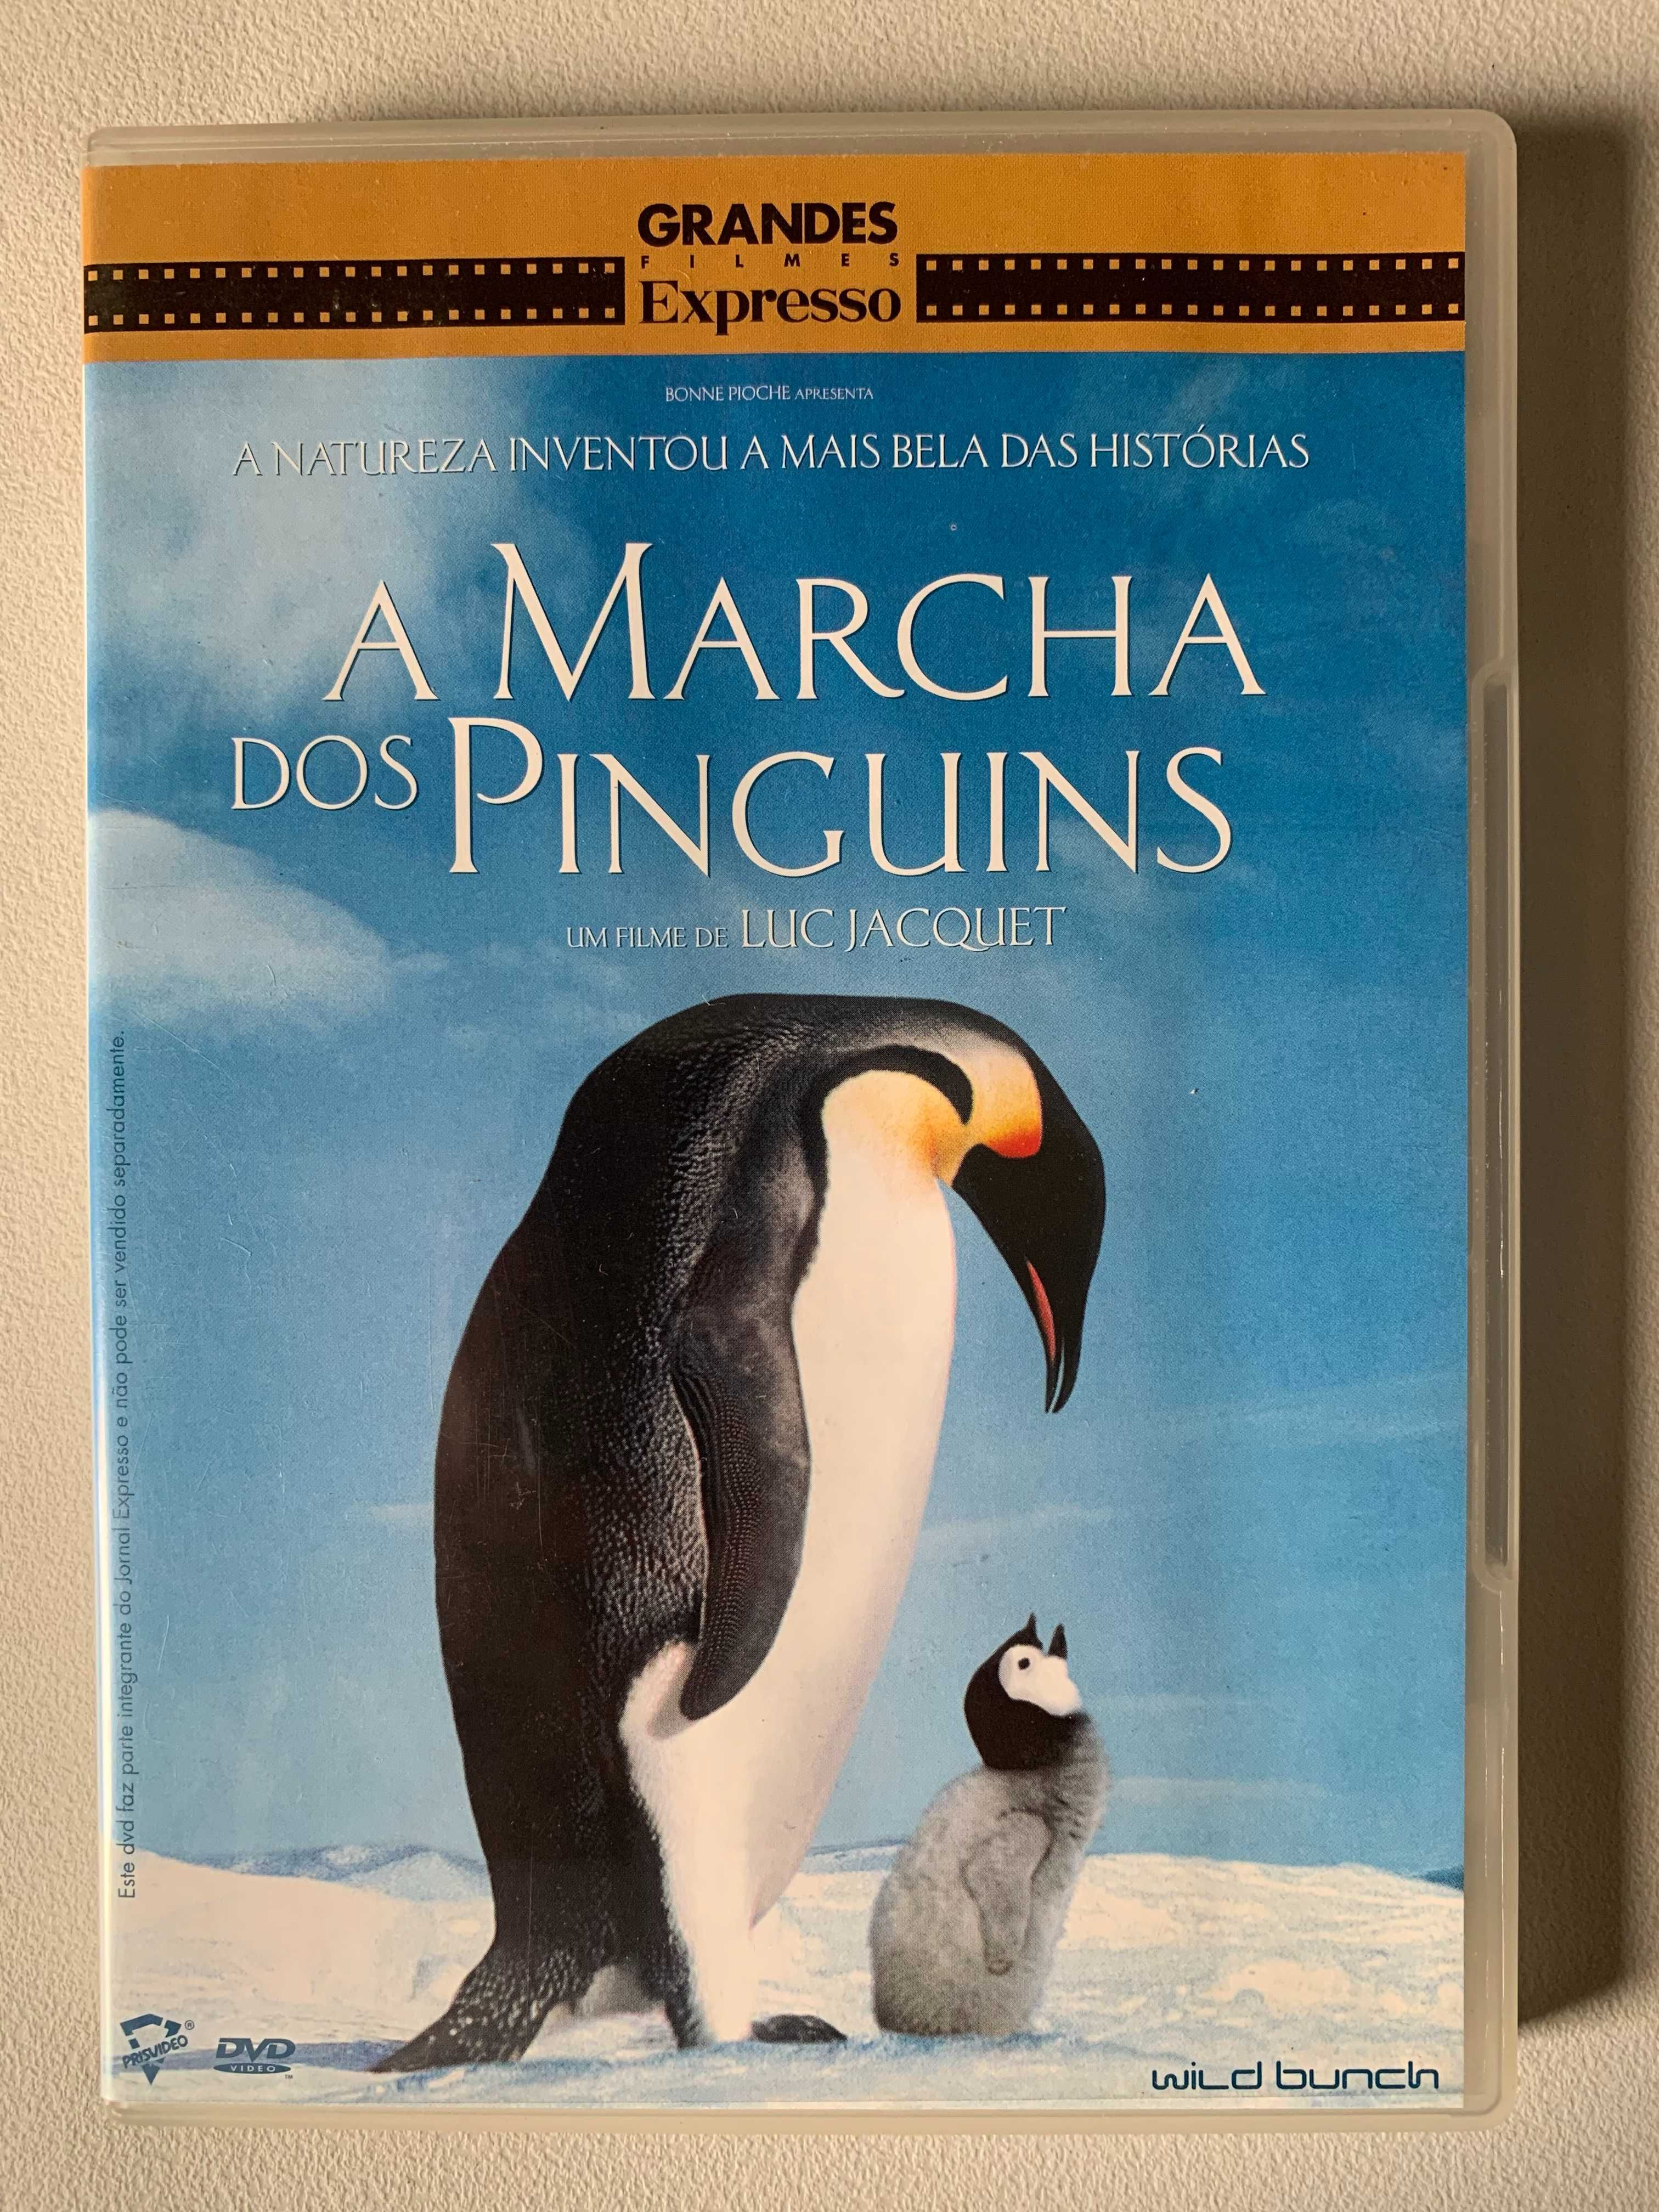 [DVD] A Marcha dos Pinguins